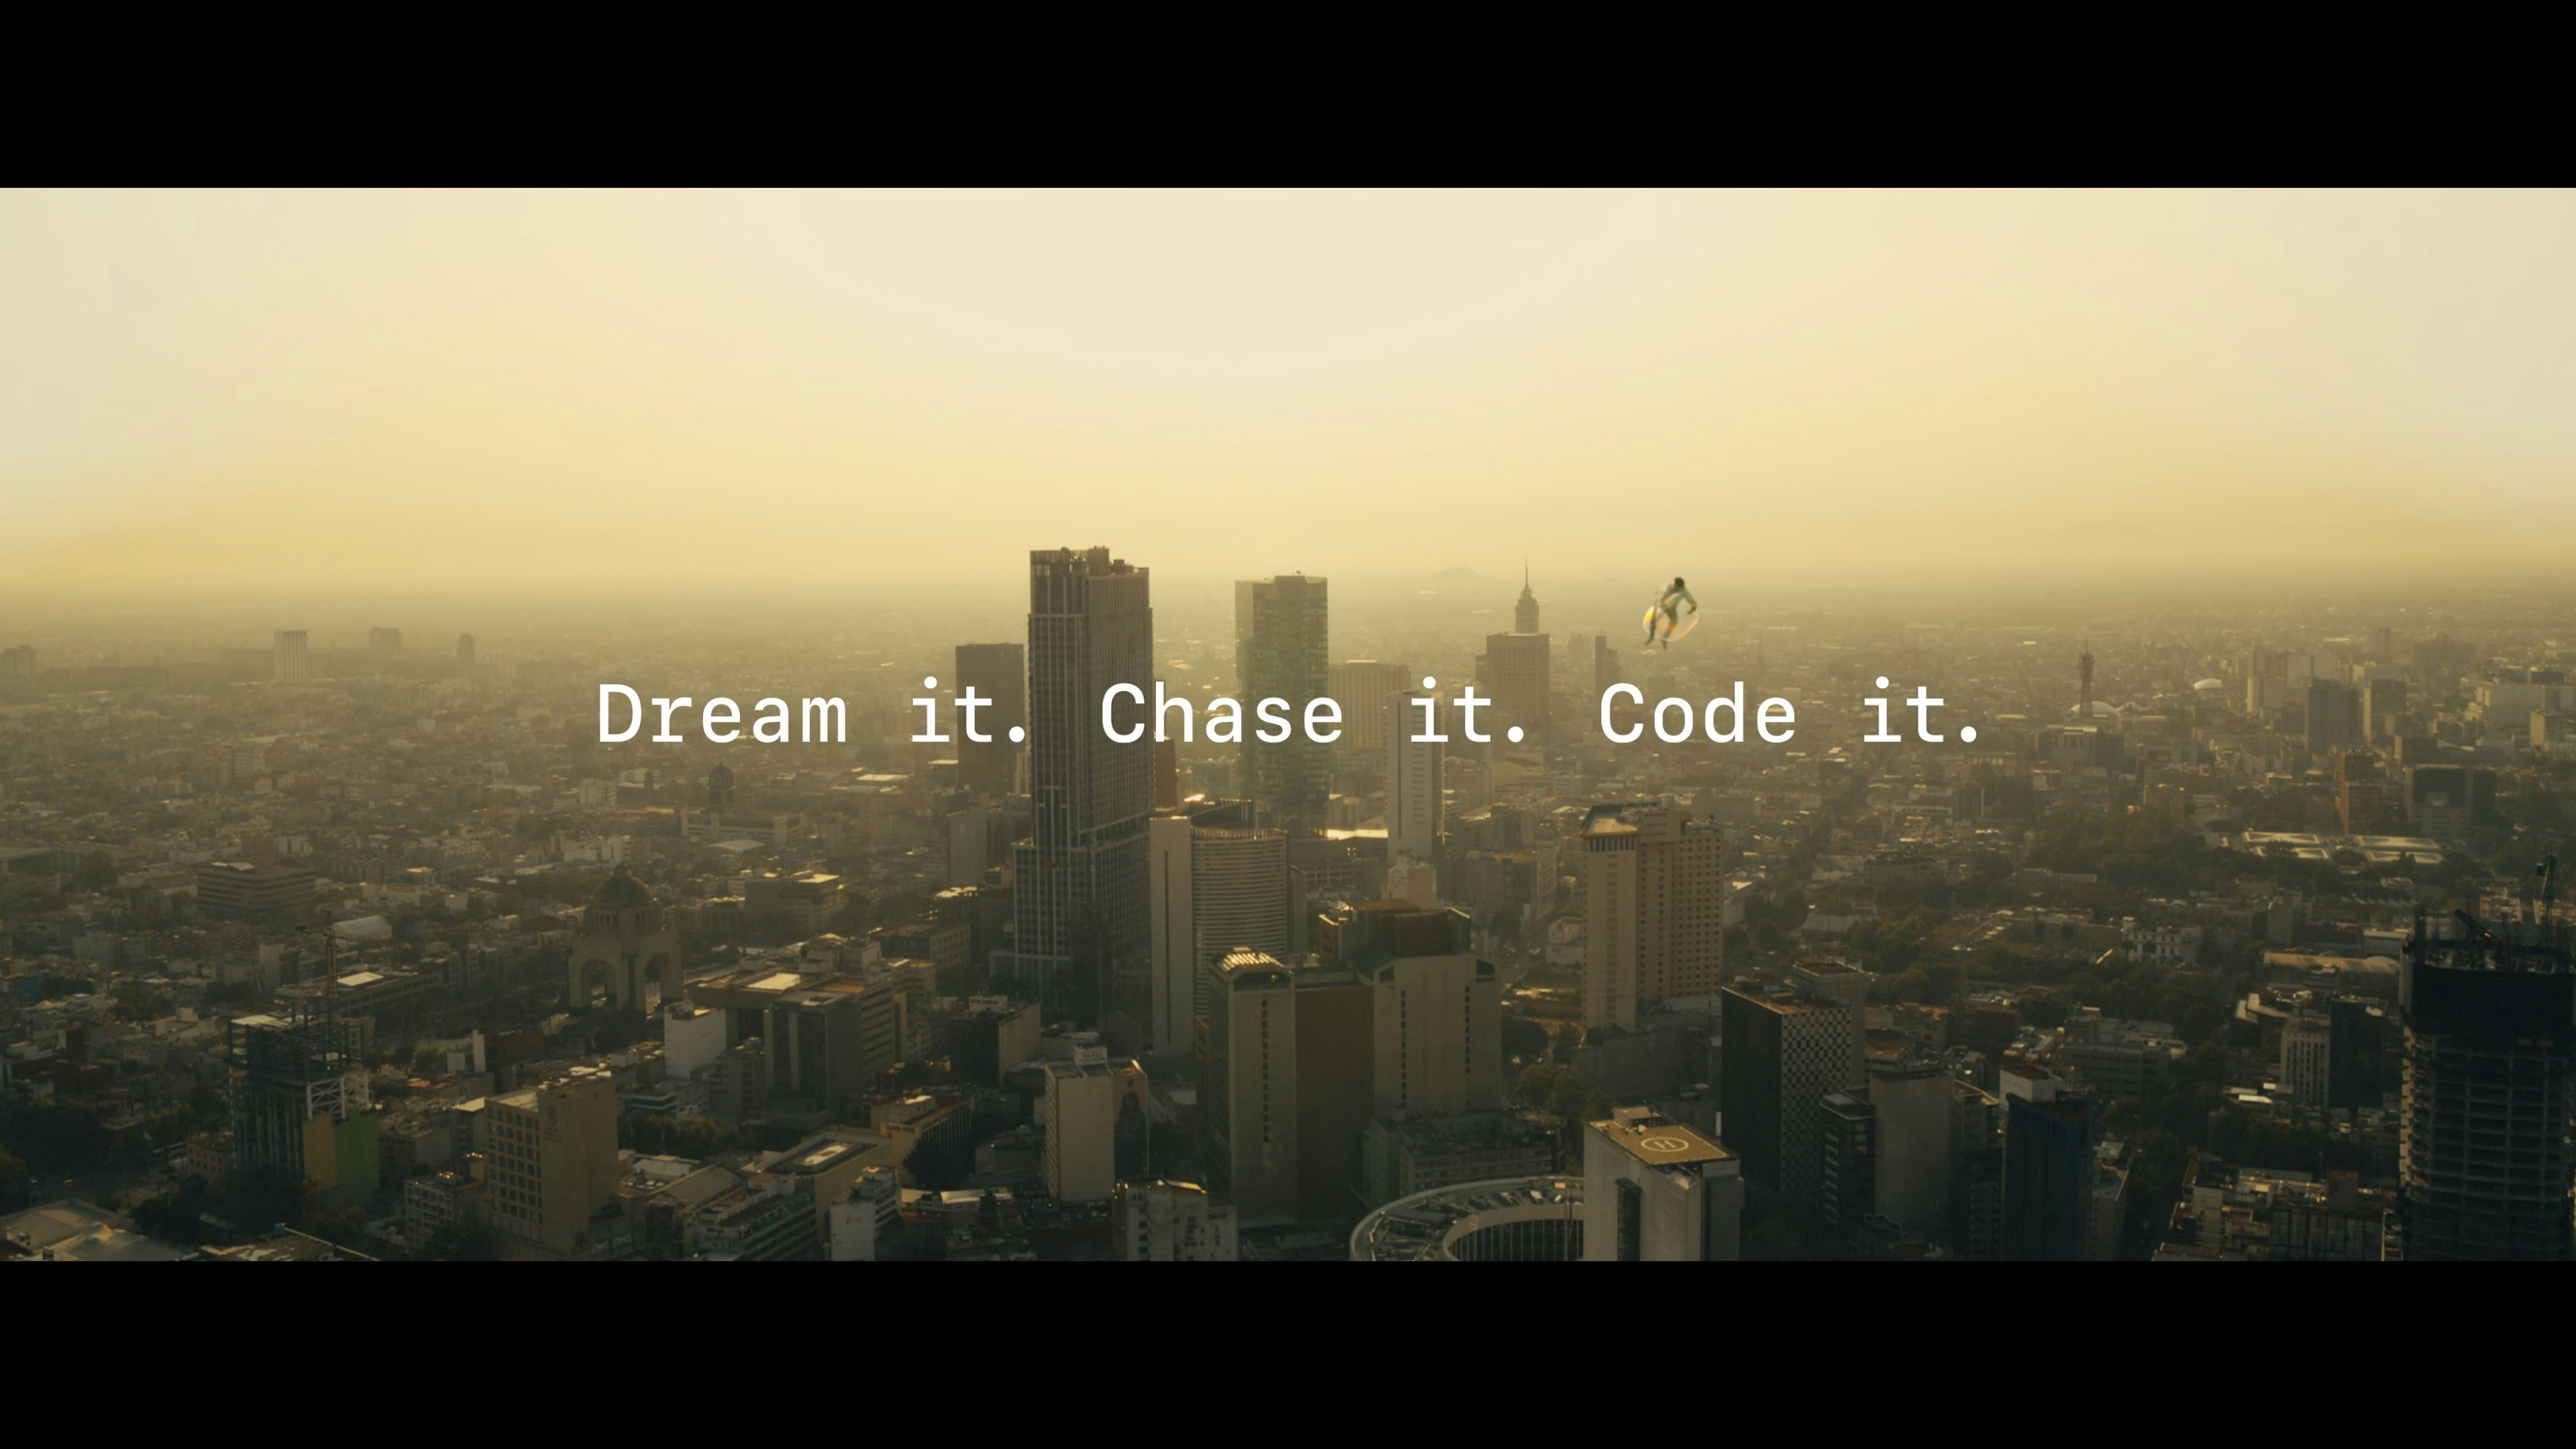 wwdc-intro-dream-it-chase-it-code-it.jpg